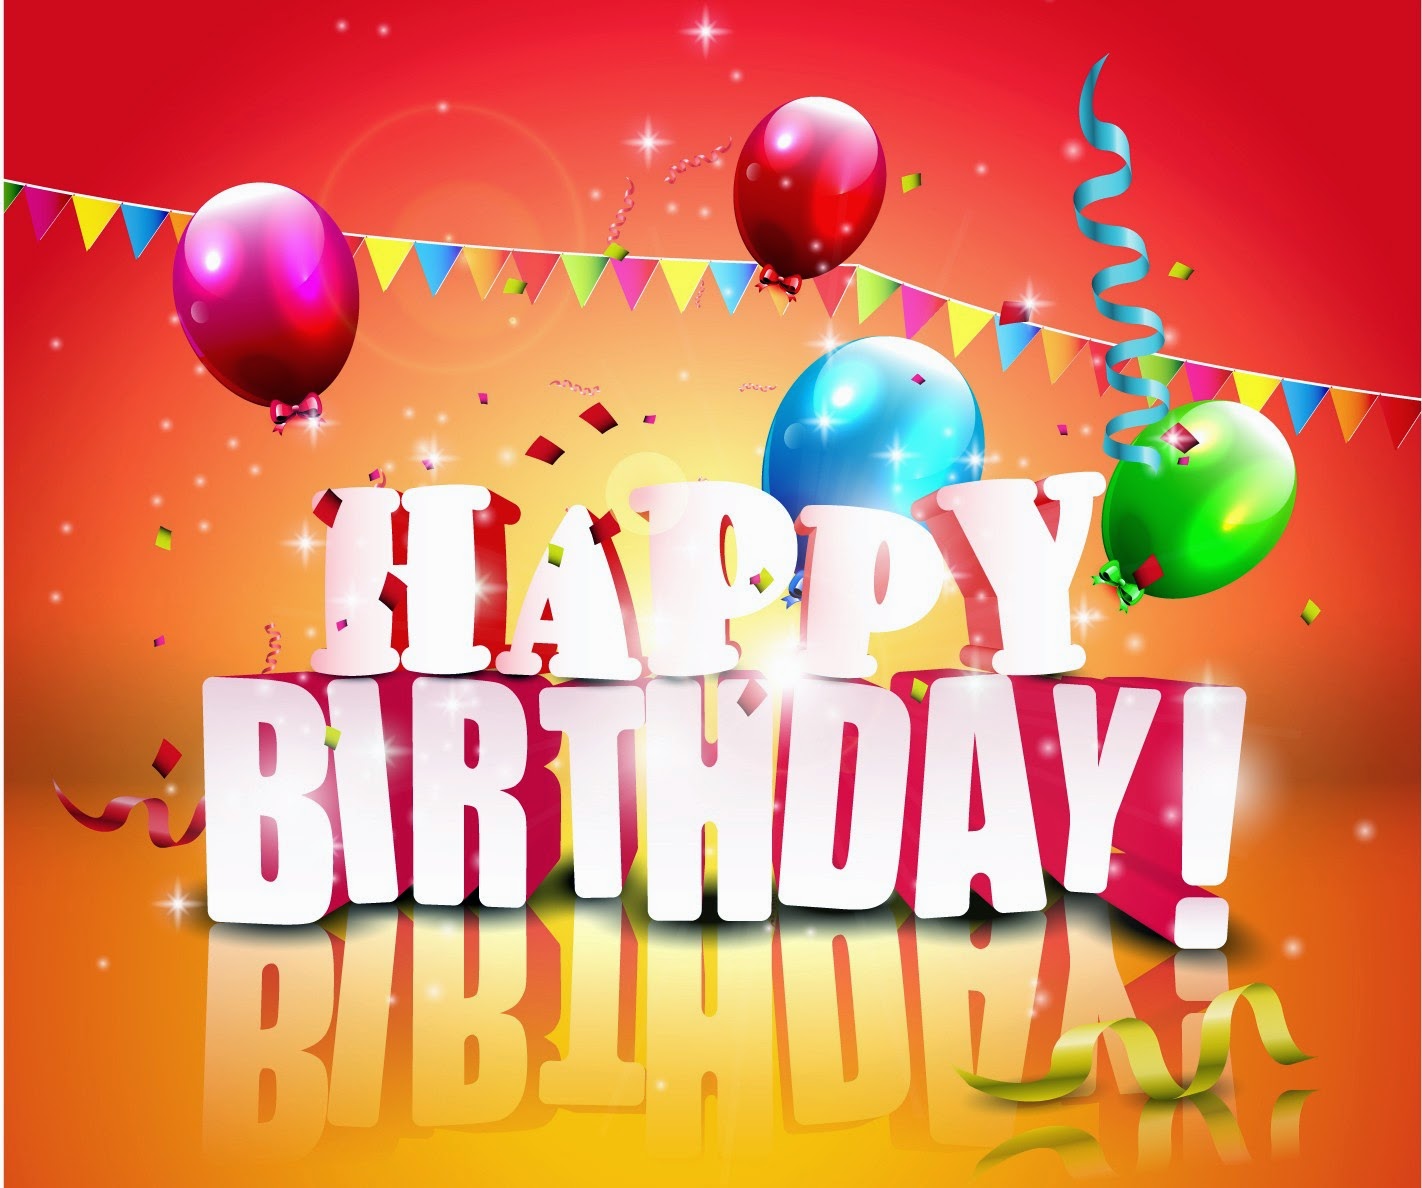 birthday-greeting-cards-ecards-wishes-5-jpg-1422-1188-free-birthday